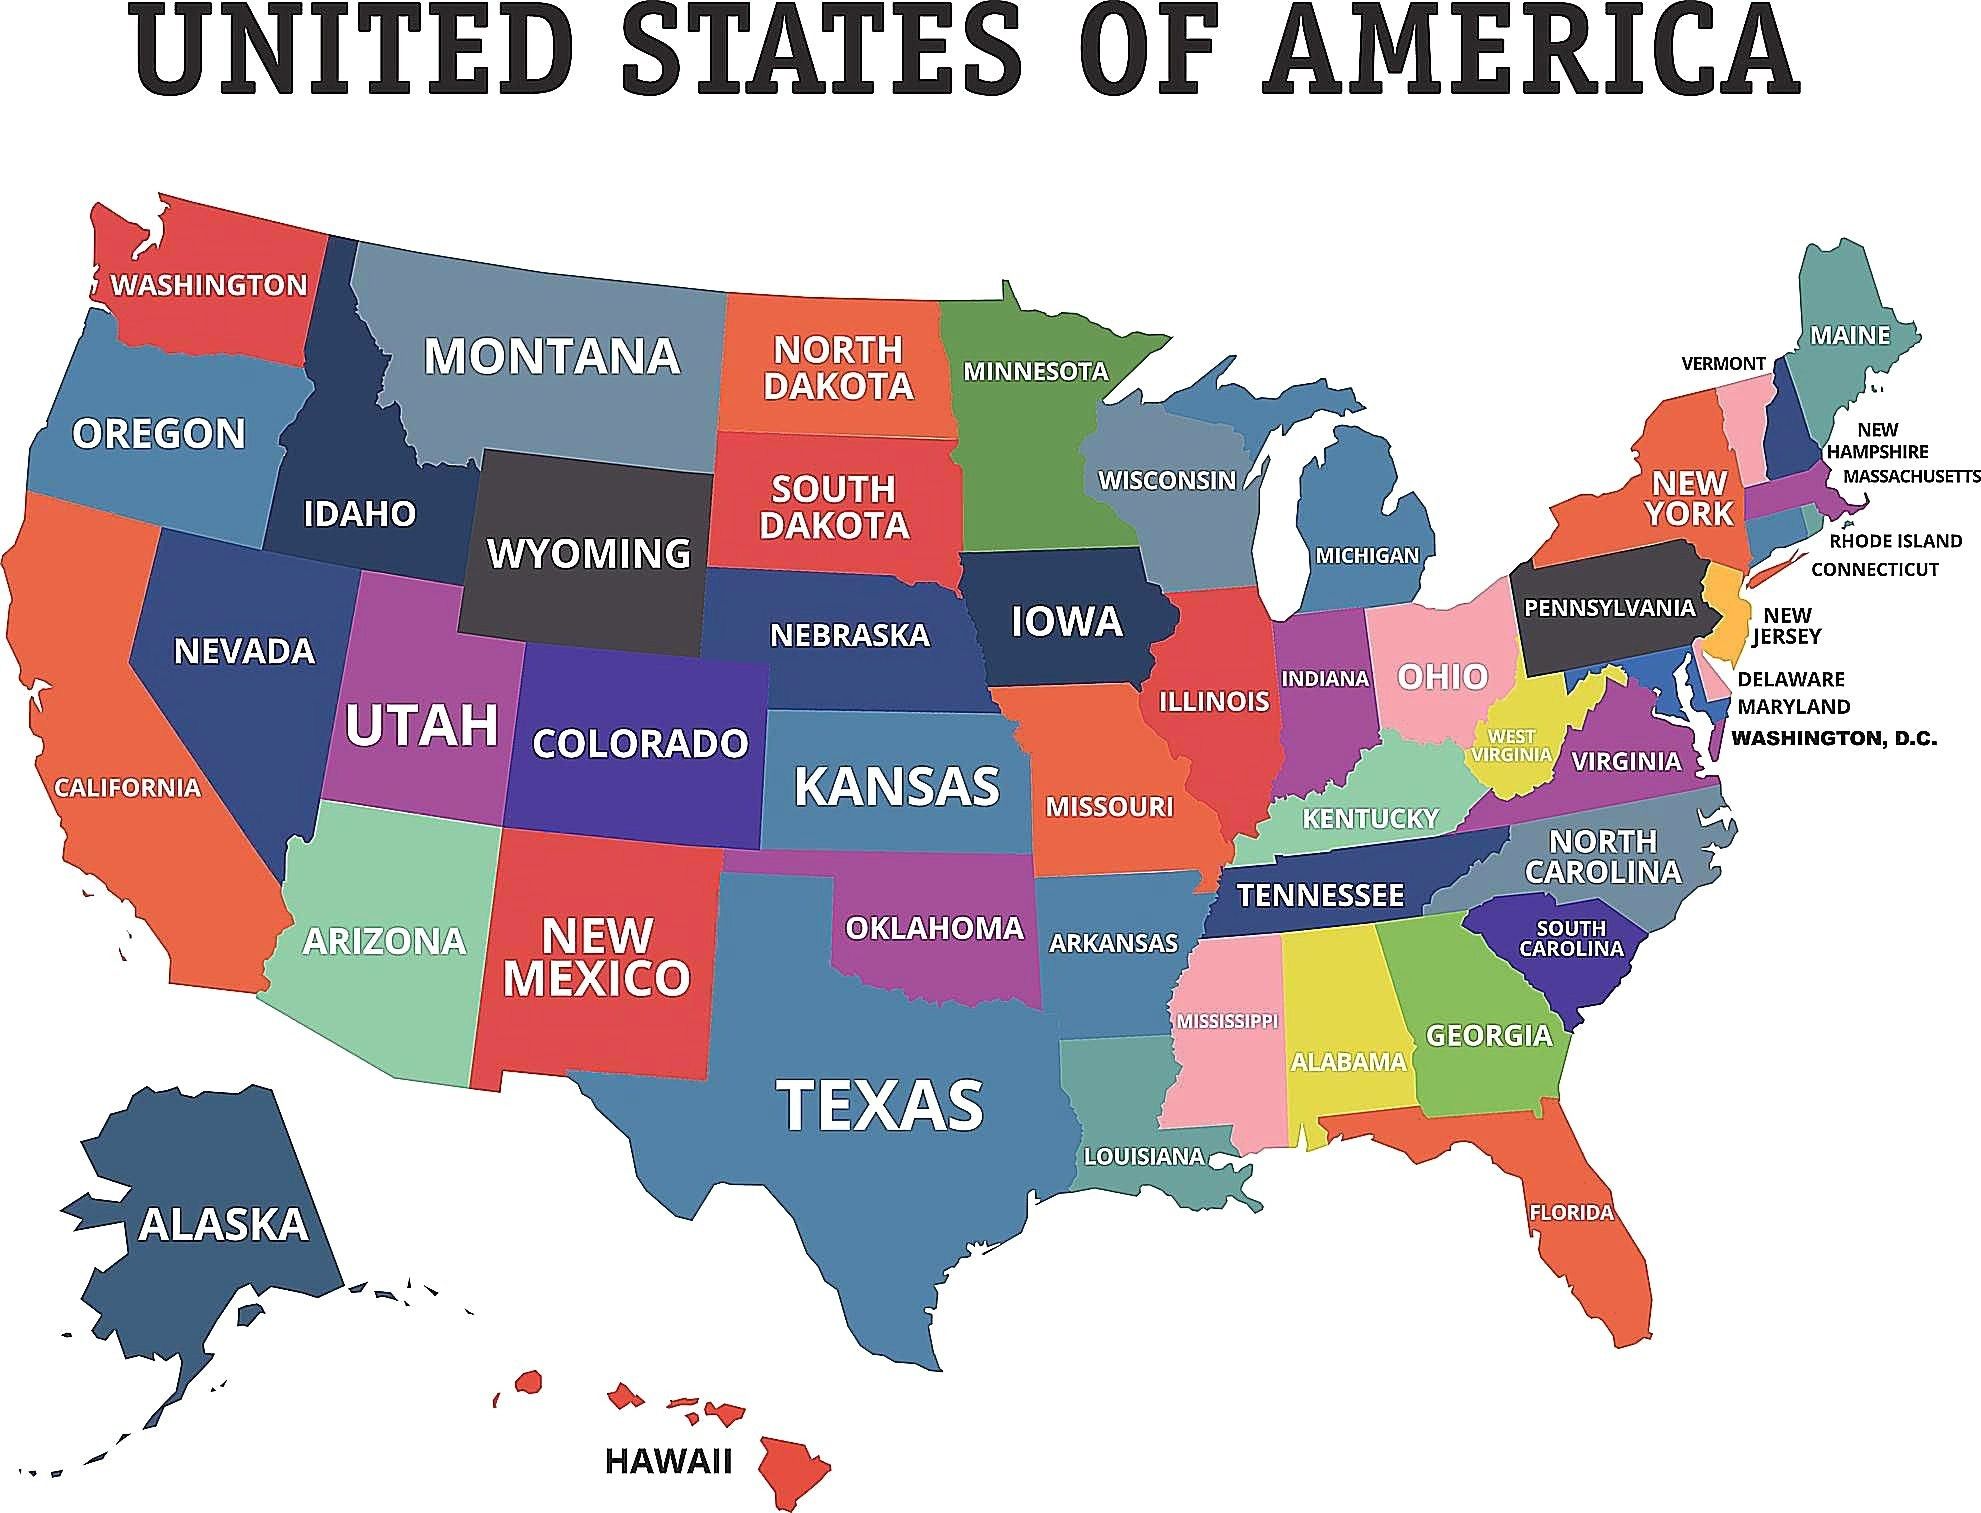 United States Map Desktop, iPhone, Desktop HD Background / Wallpaper (1080p, 4k) (png / jpg) (2021)